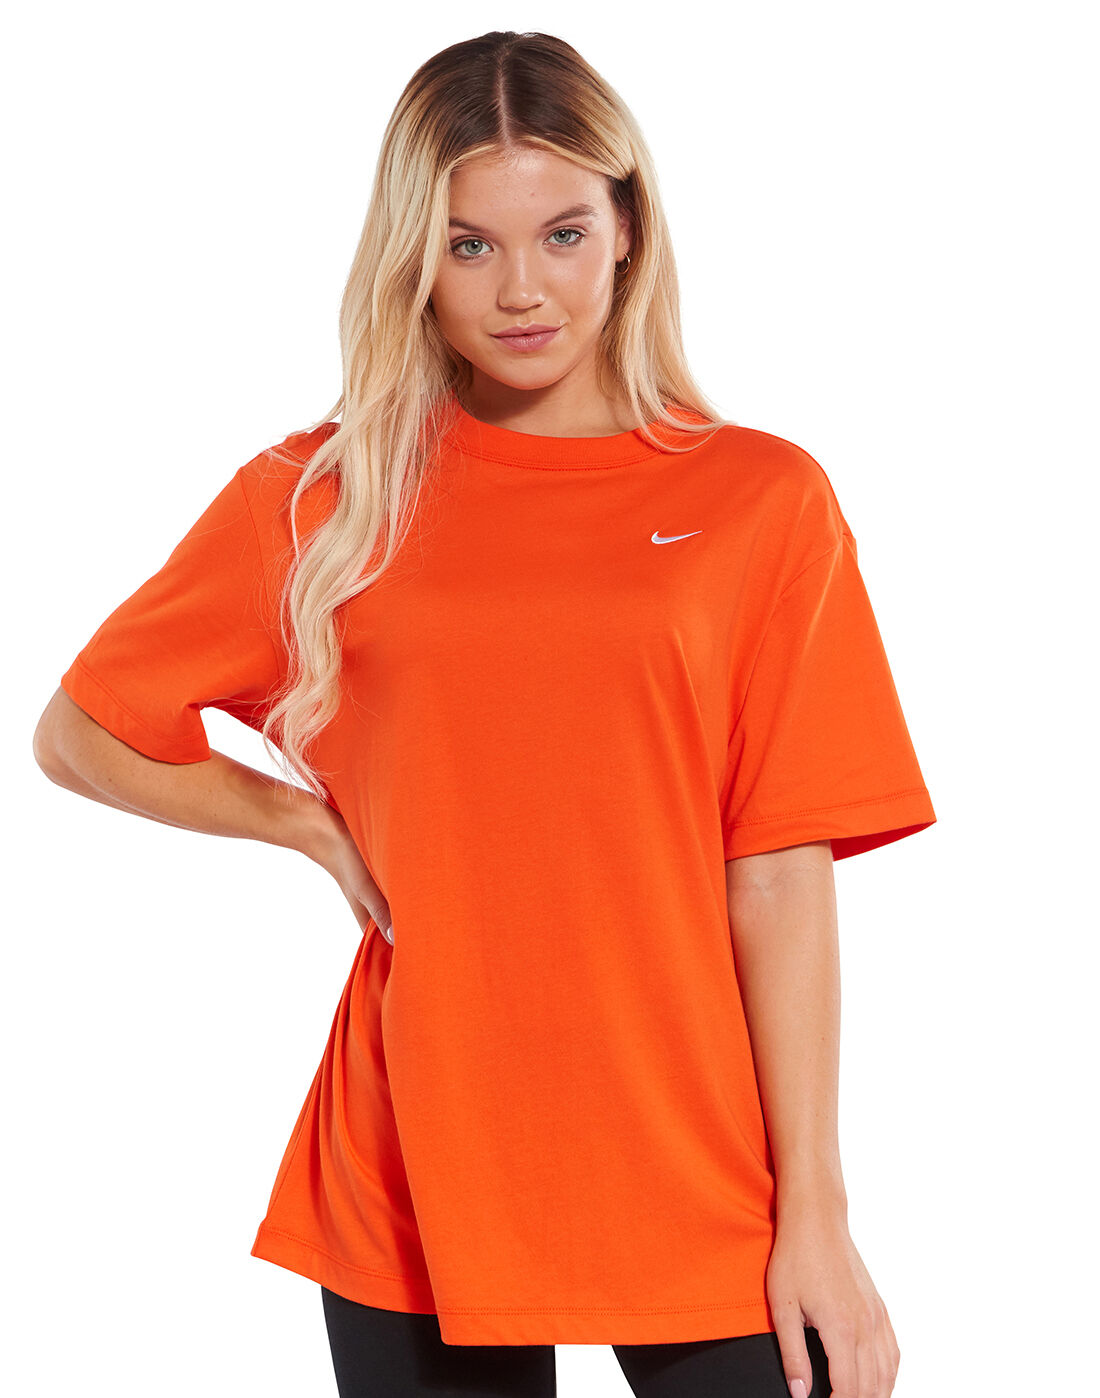 orange nike t shirt women's 